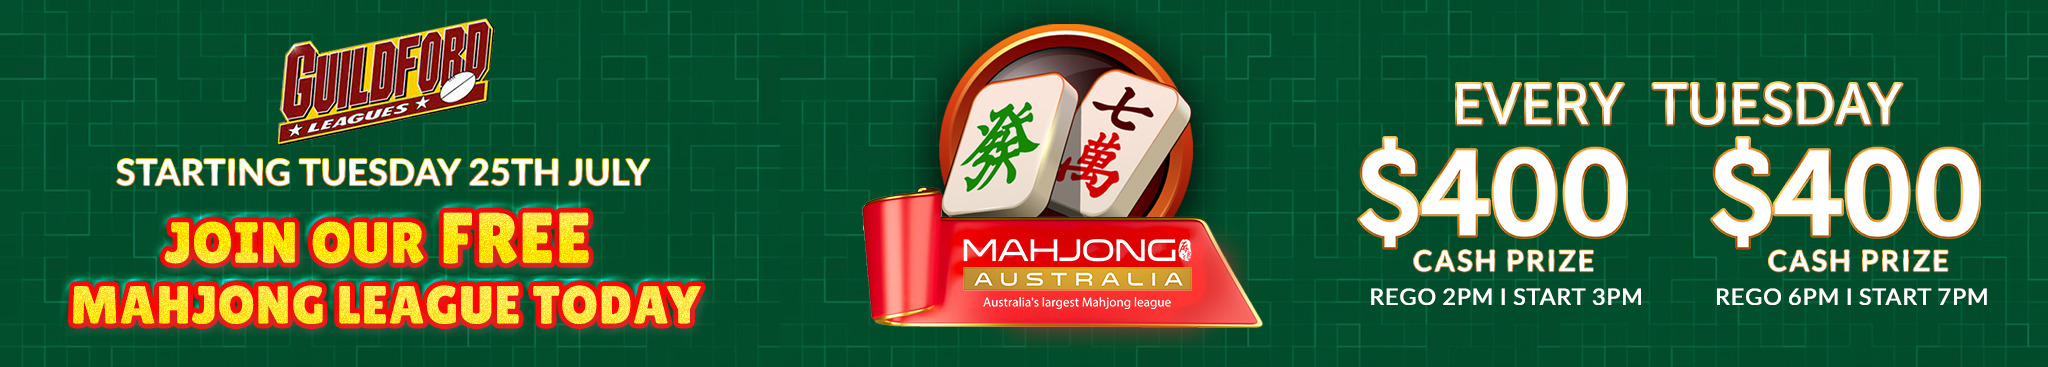 Tuesday Mahjong at Guildford Leagues. Presented by Mahjong Australia